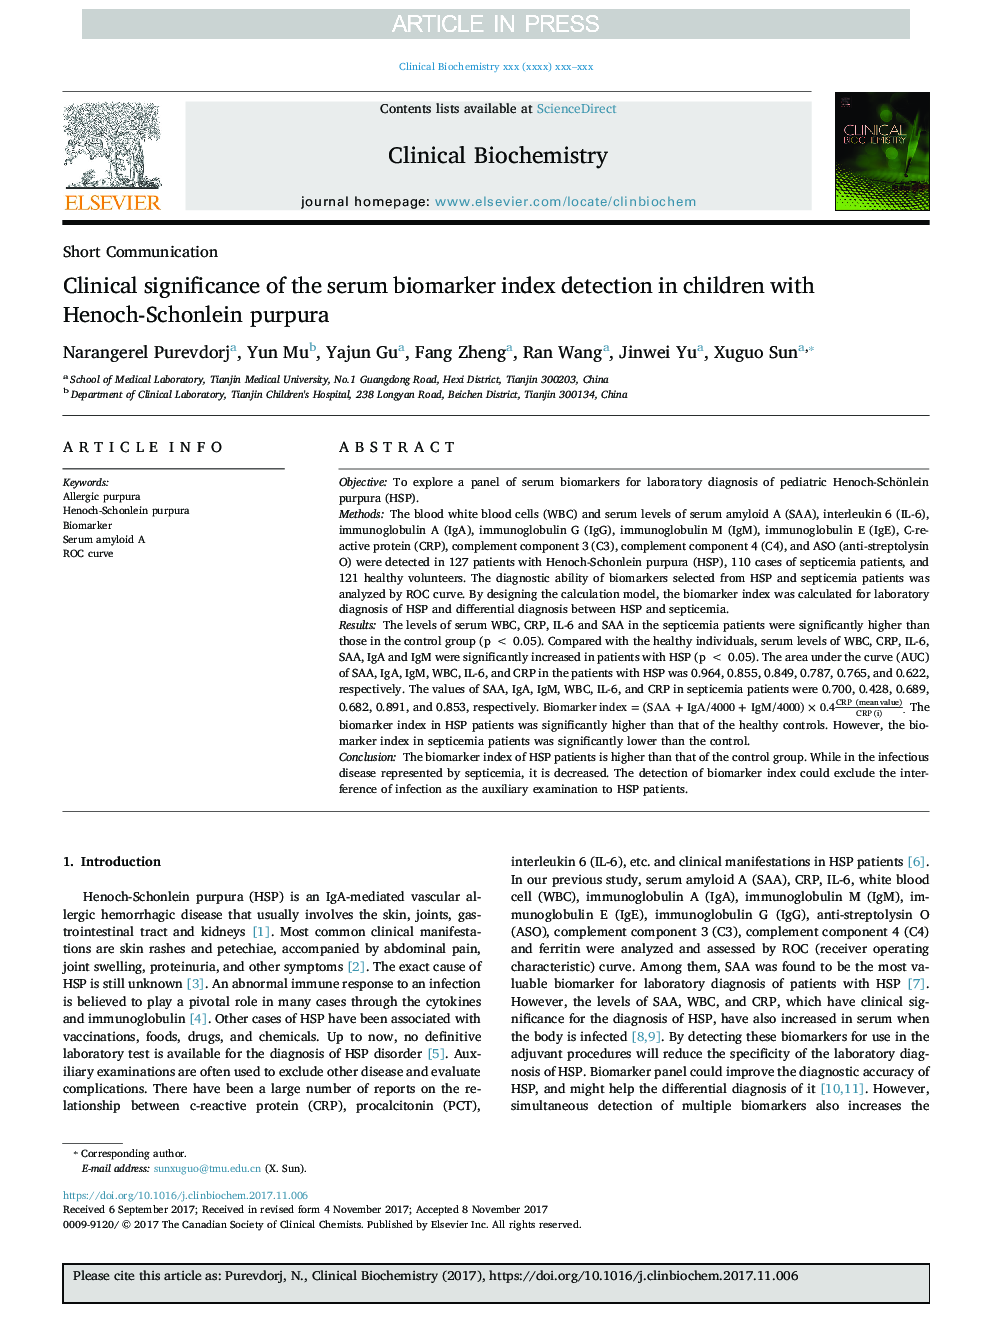 Clinical significance of the serum biomarker index detection in children with Henoch-Schonlein purpura